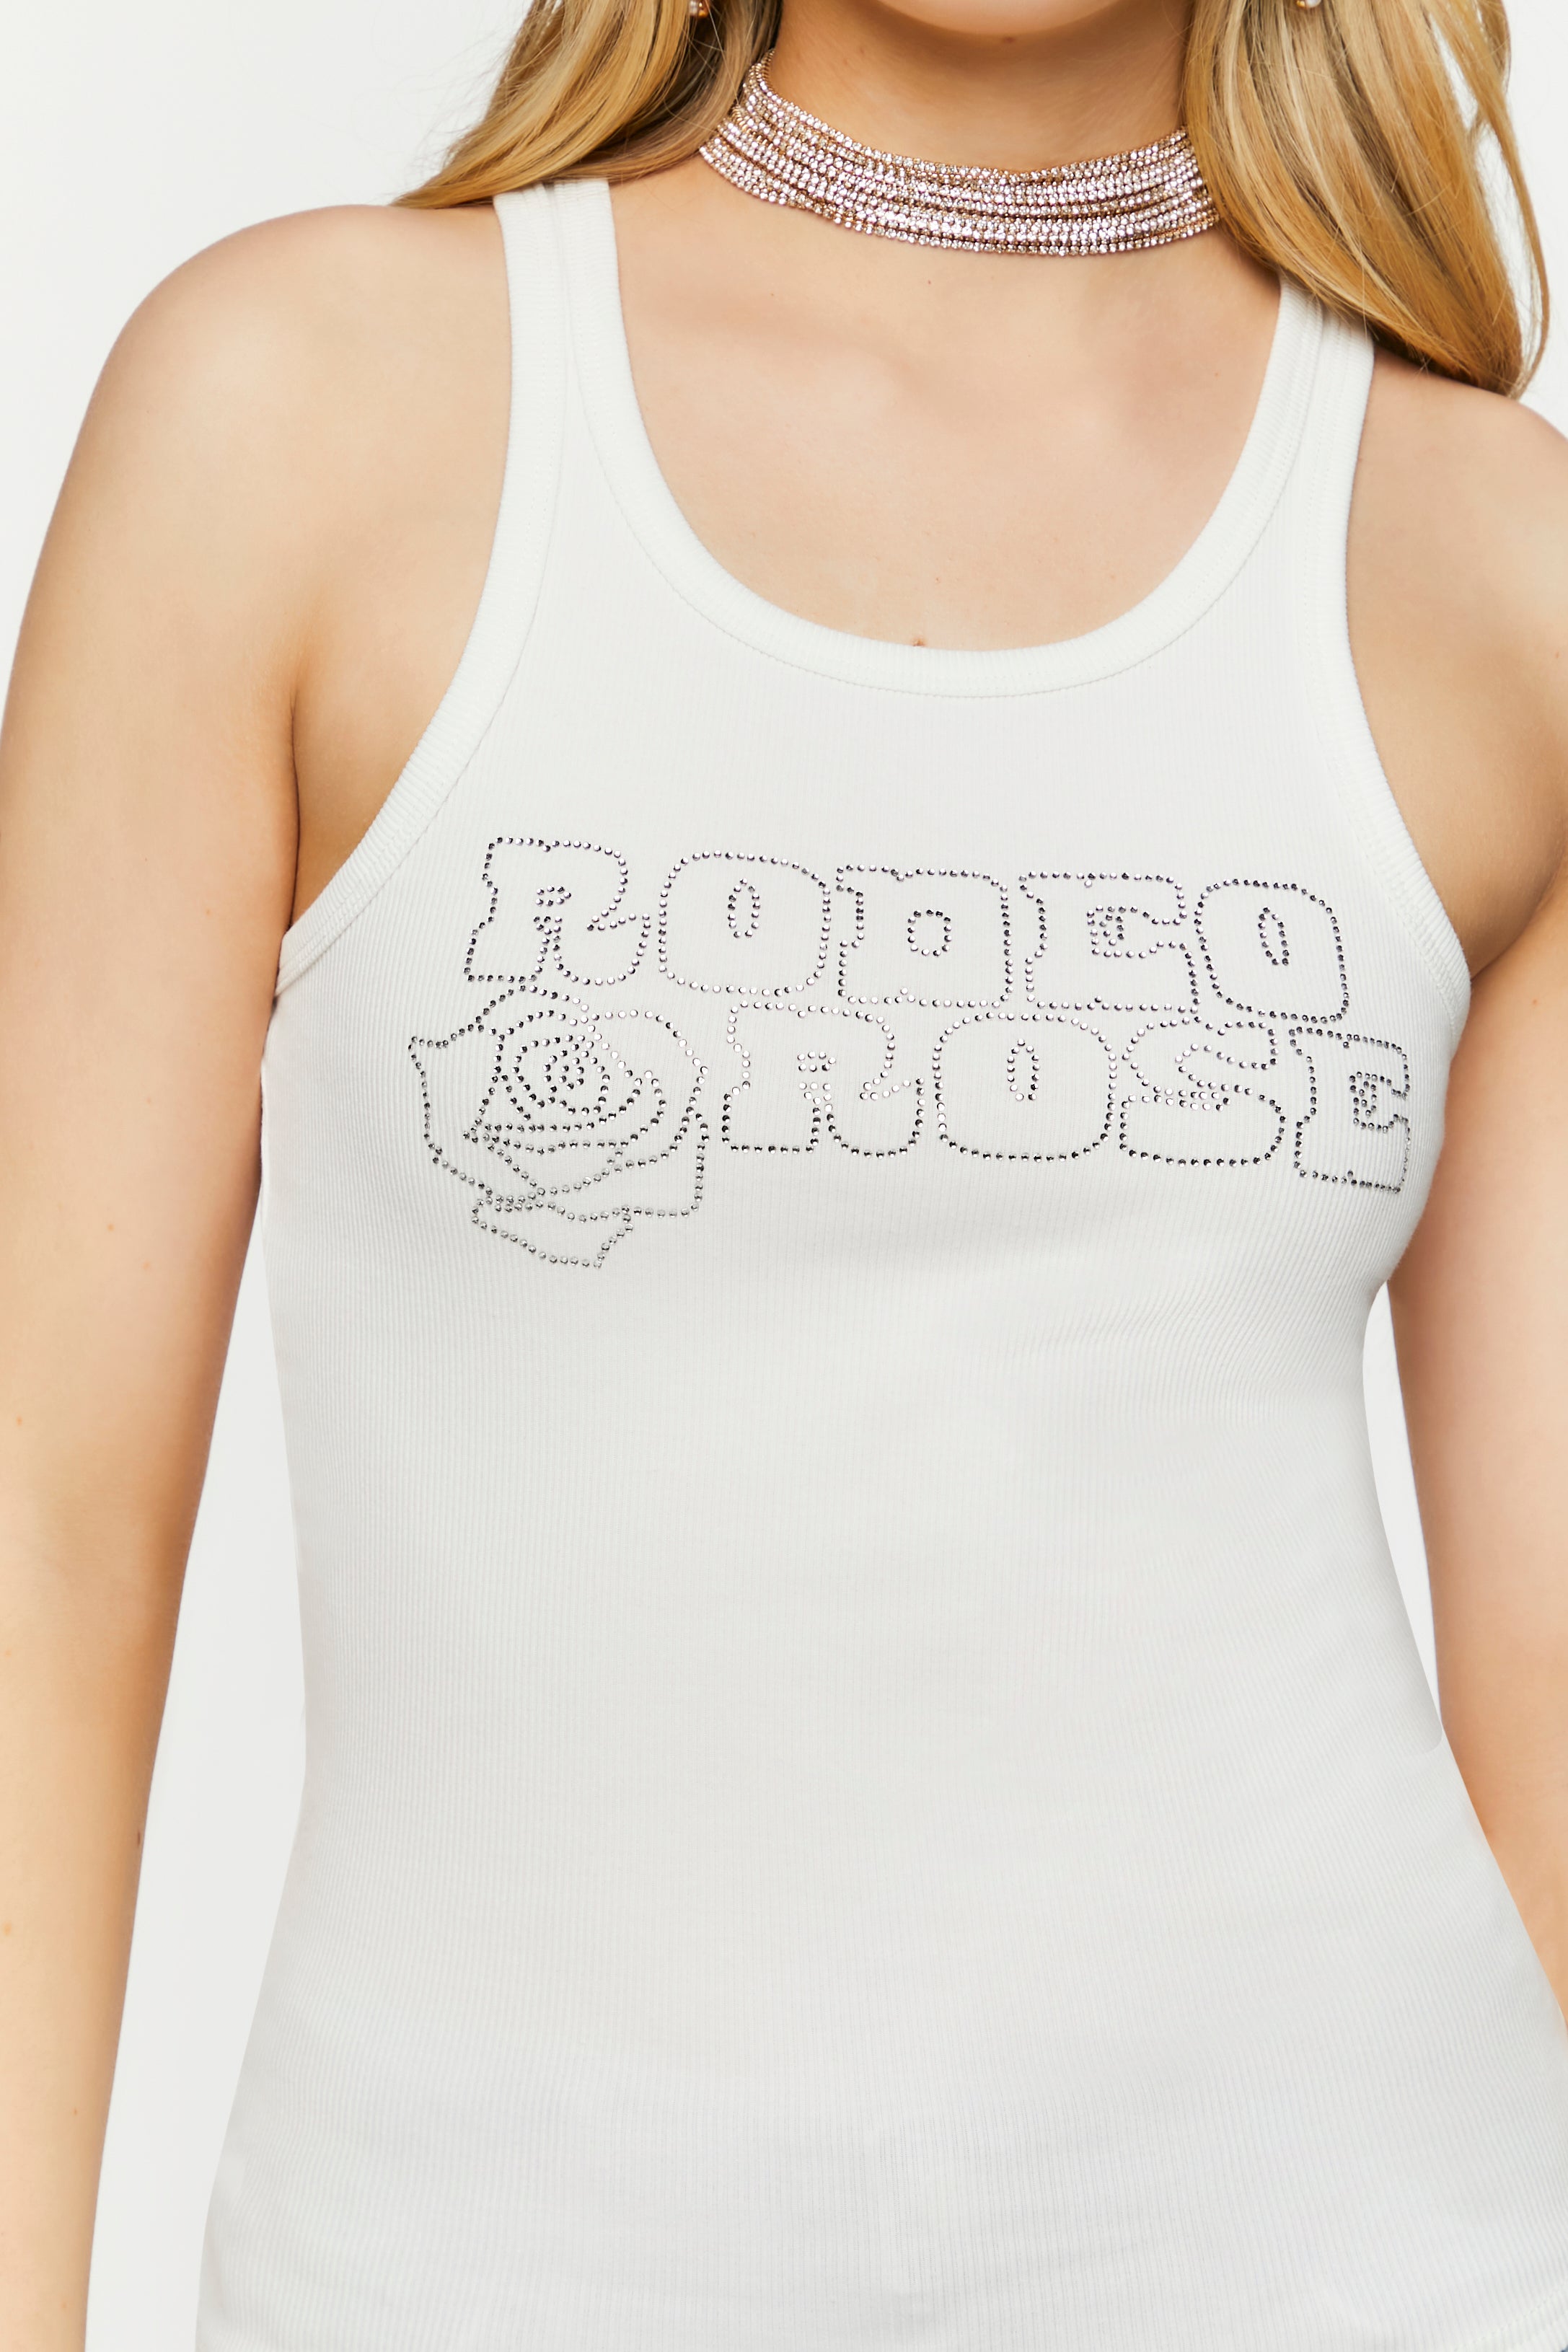 White/Silver Rhinestone Rodeo Rose Tank Top 1